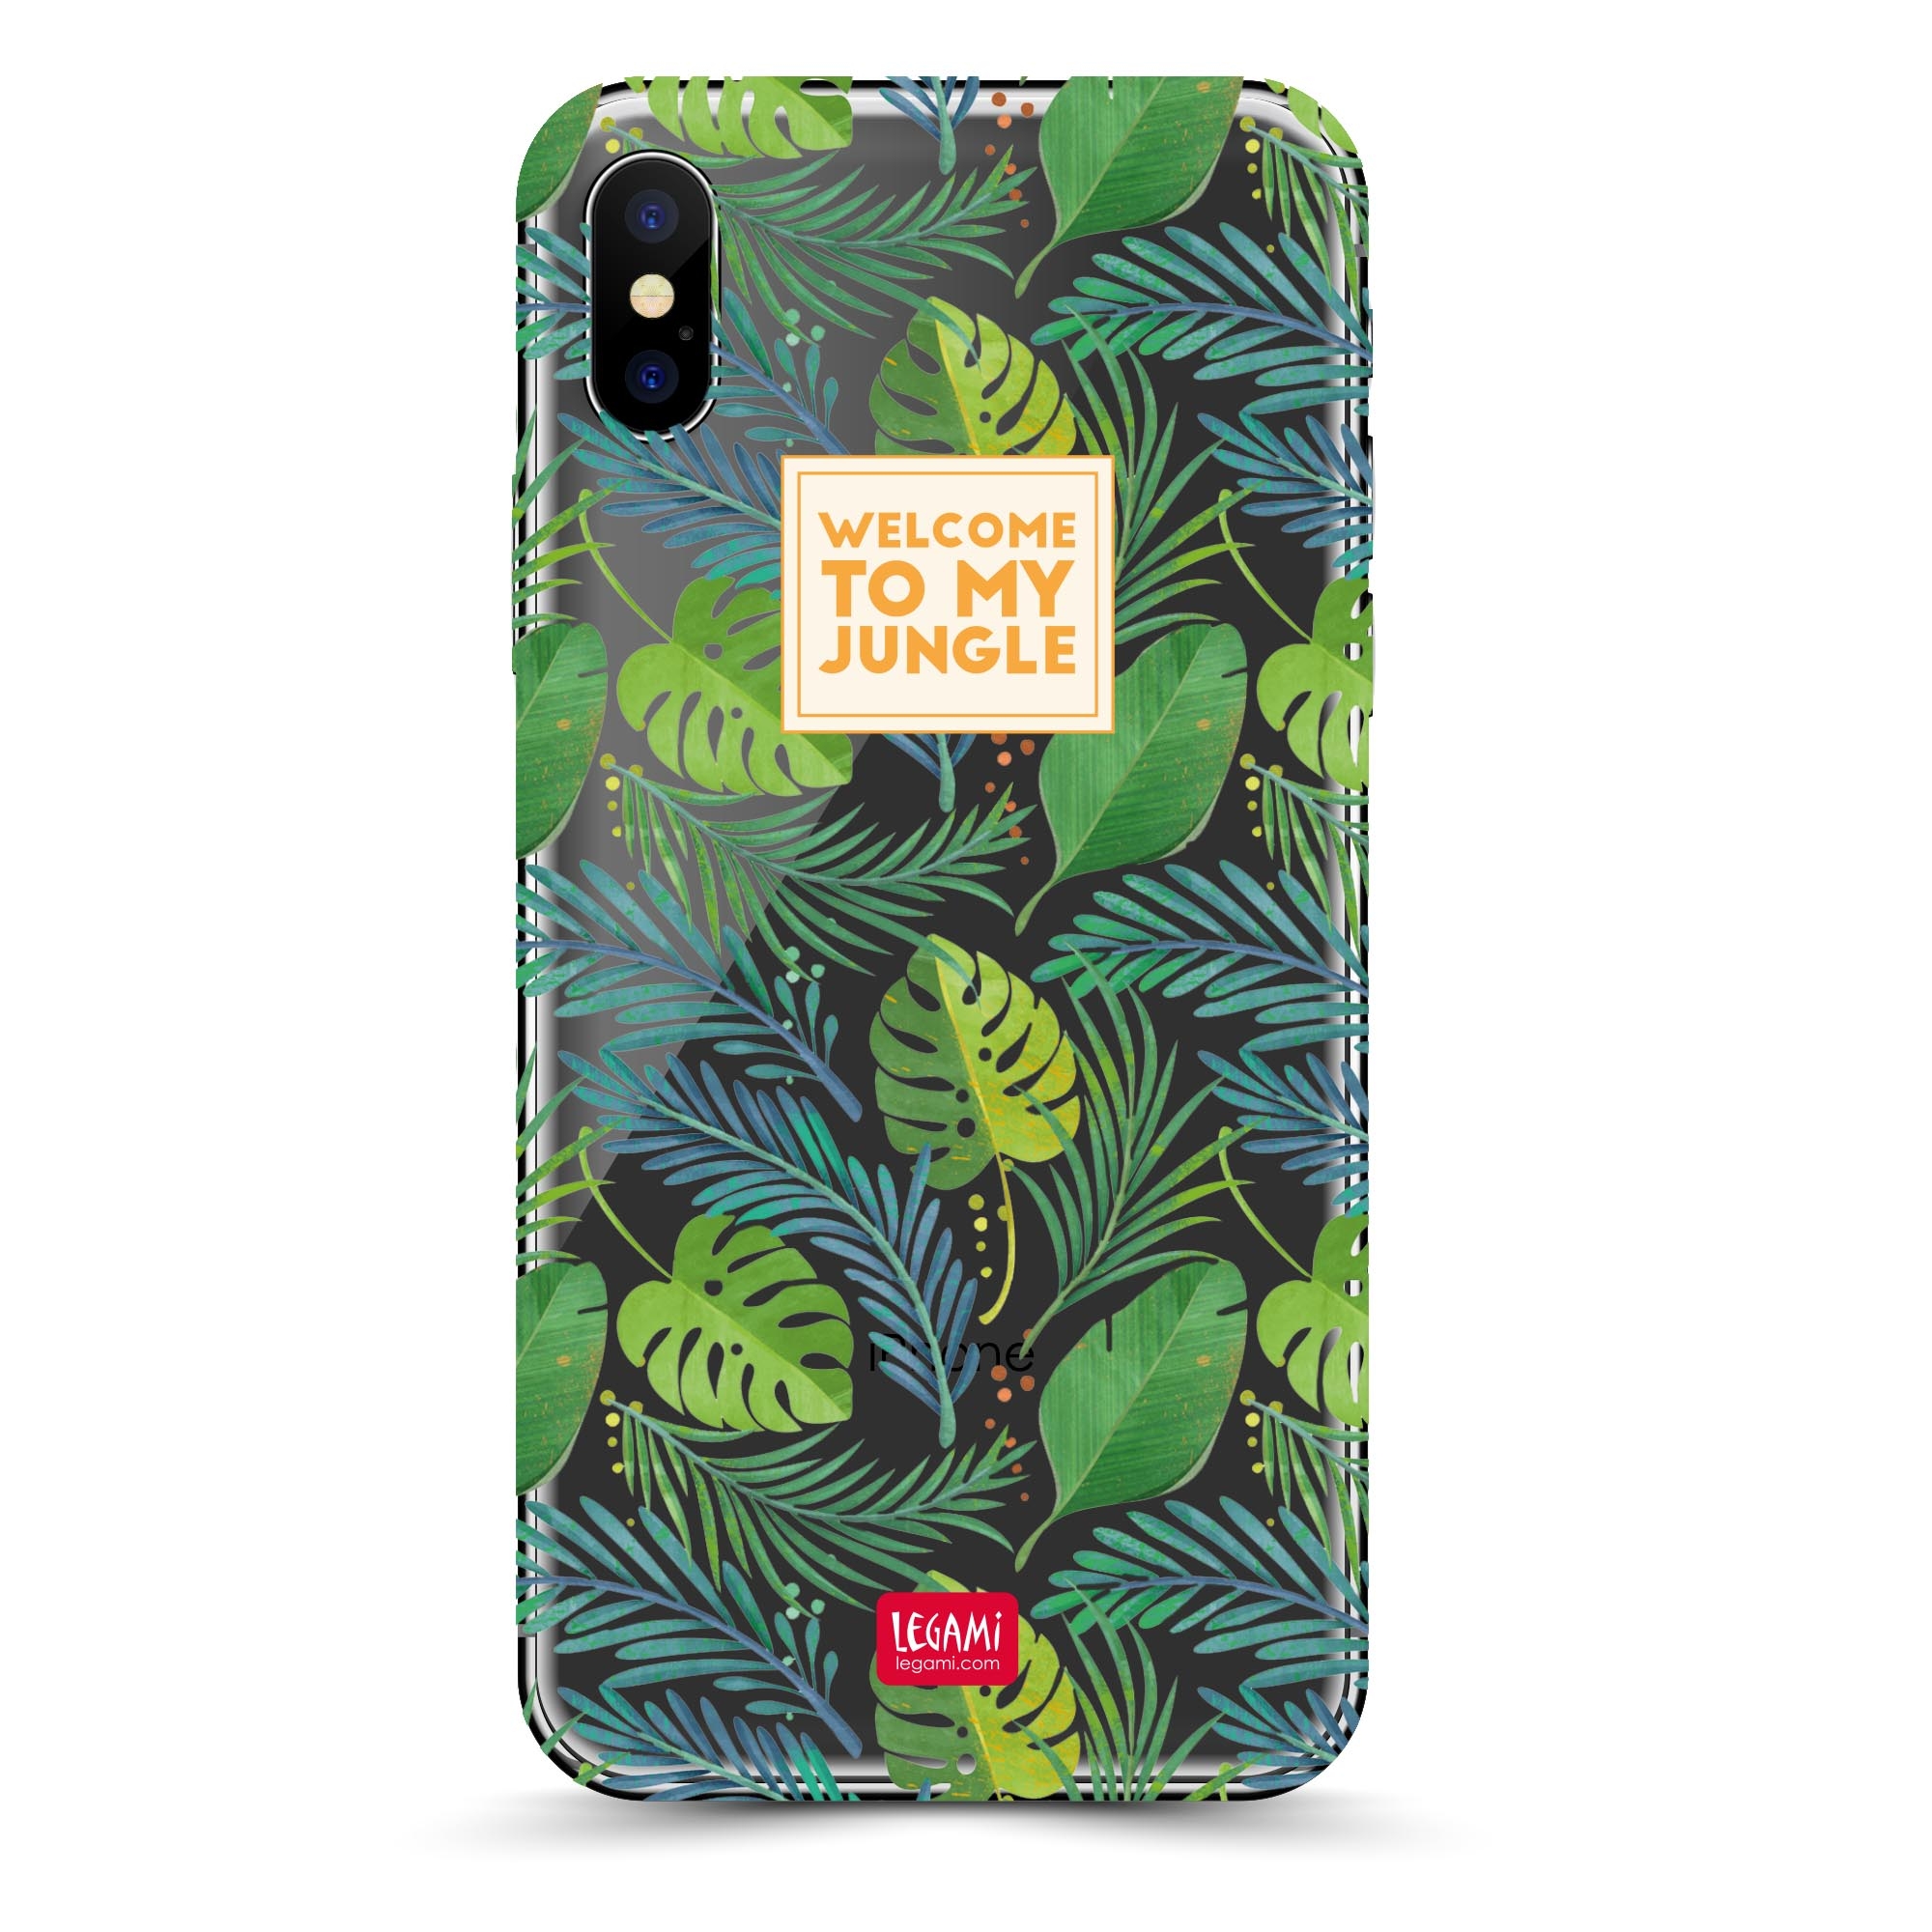  Carcasa Iphone X - Jungle | Legami 